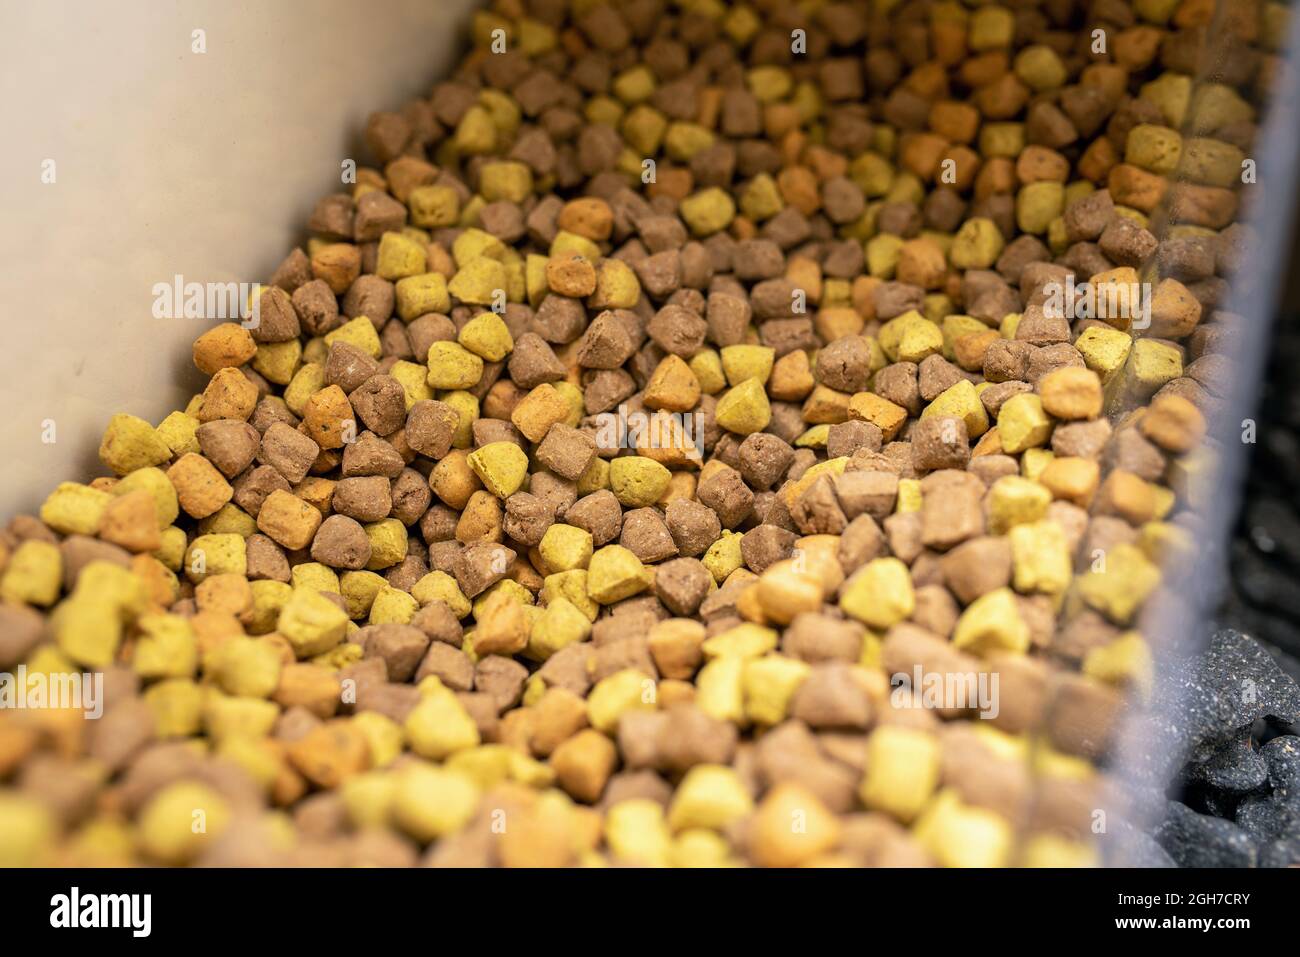 Bulk bin dog treats at a pet store. Bin full ofdog biscuit treats. Stock Photo